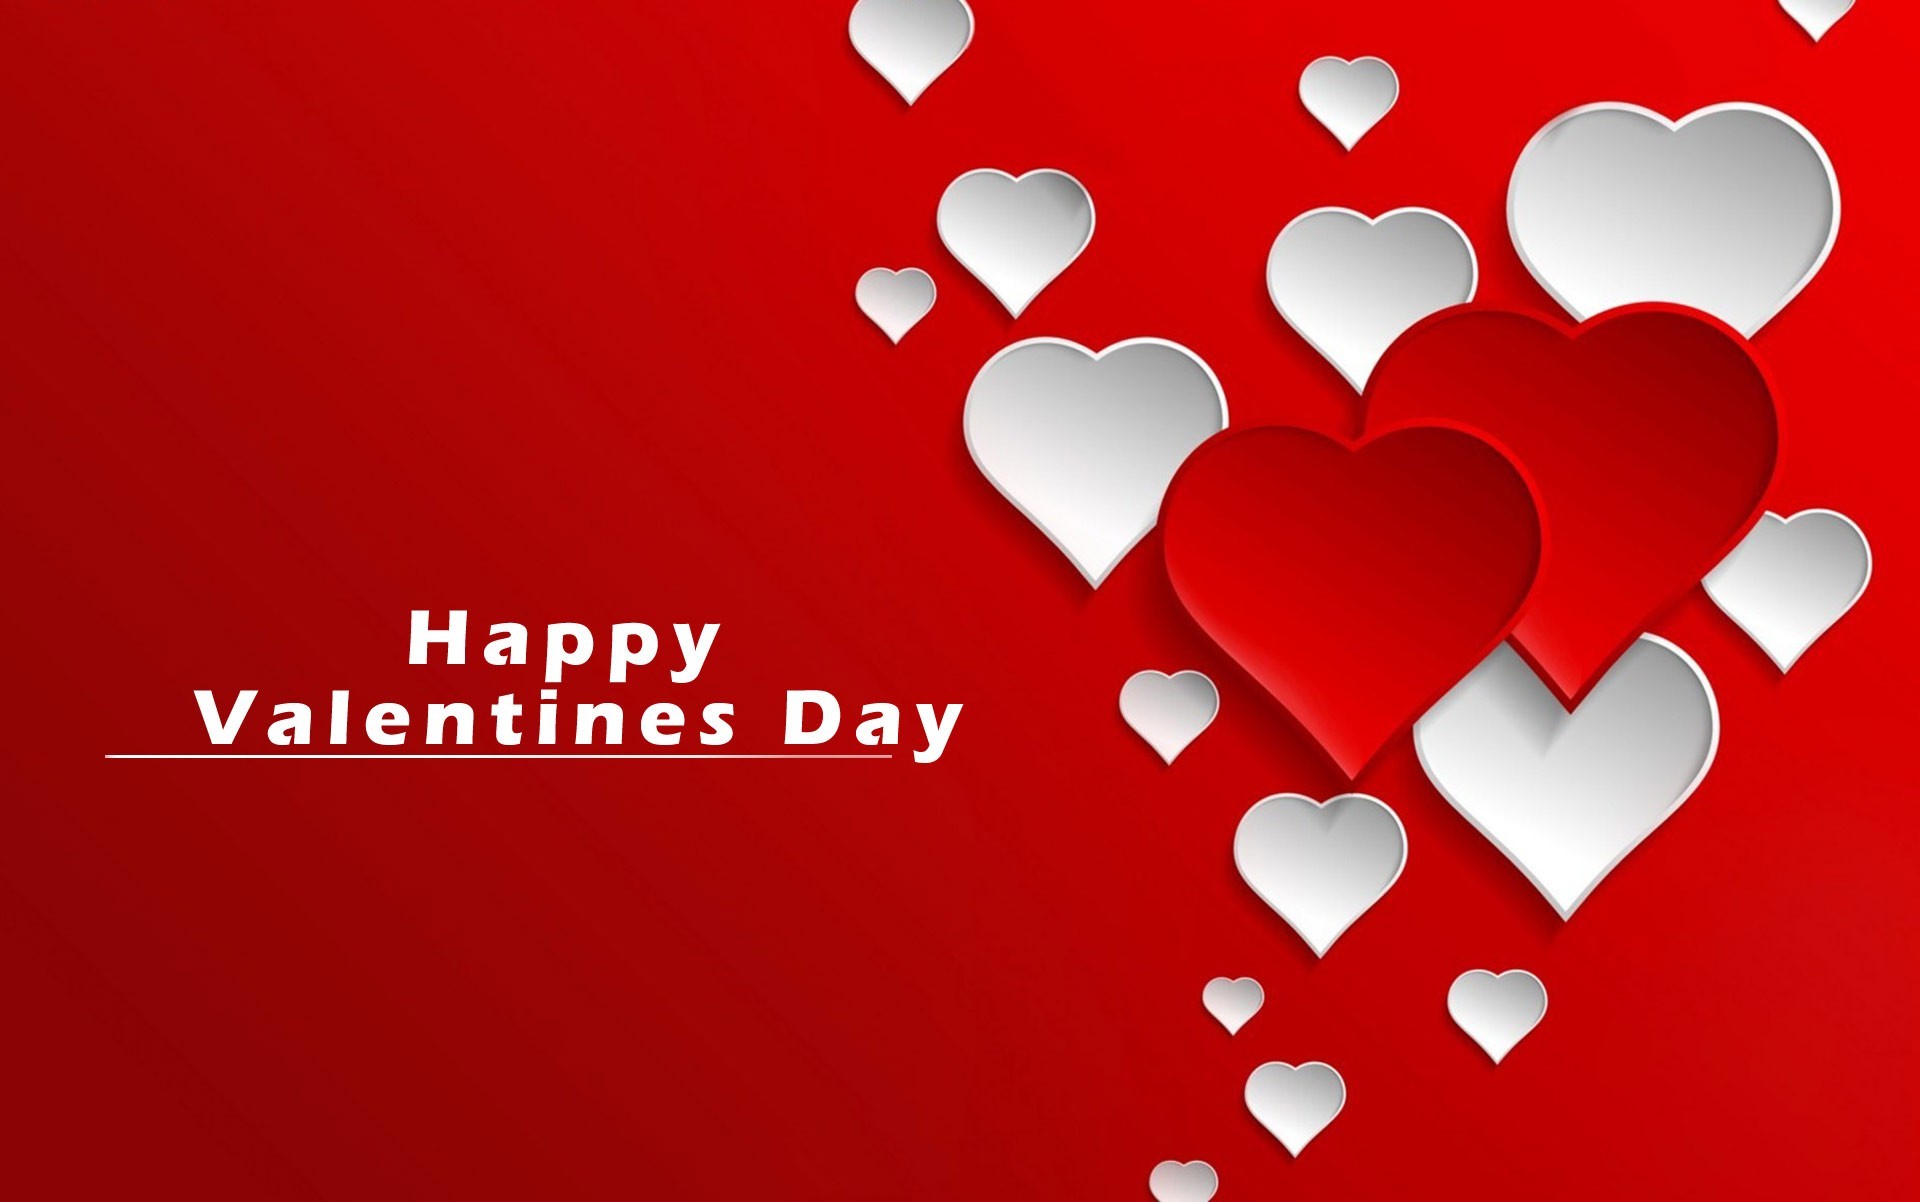 happy valentine day wallpaper hd,heart,red,valentine's day,text,love